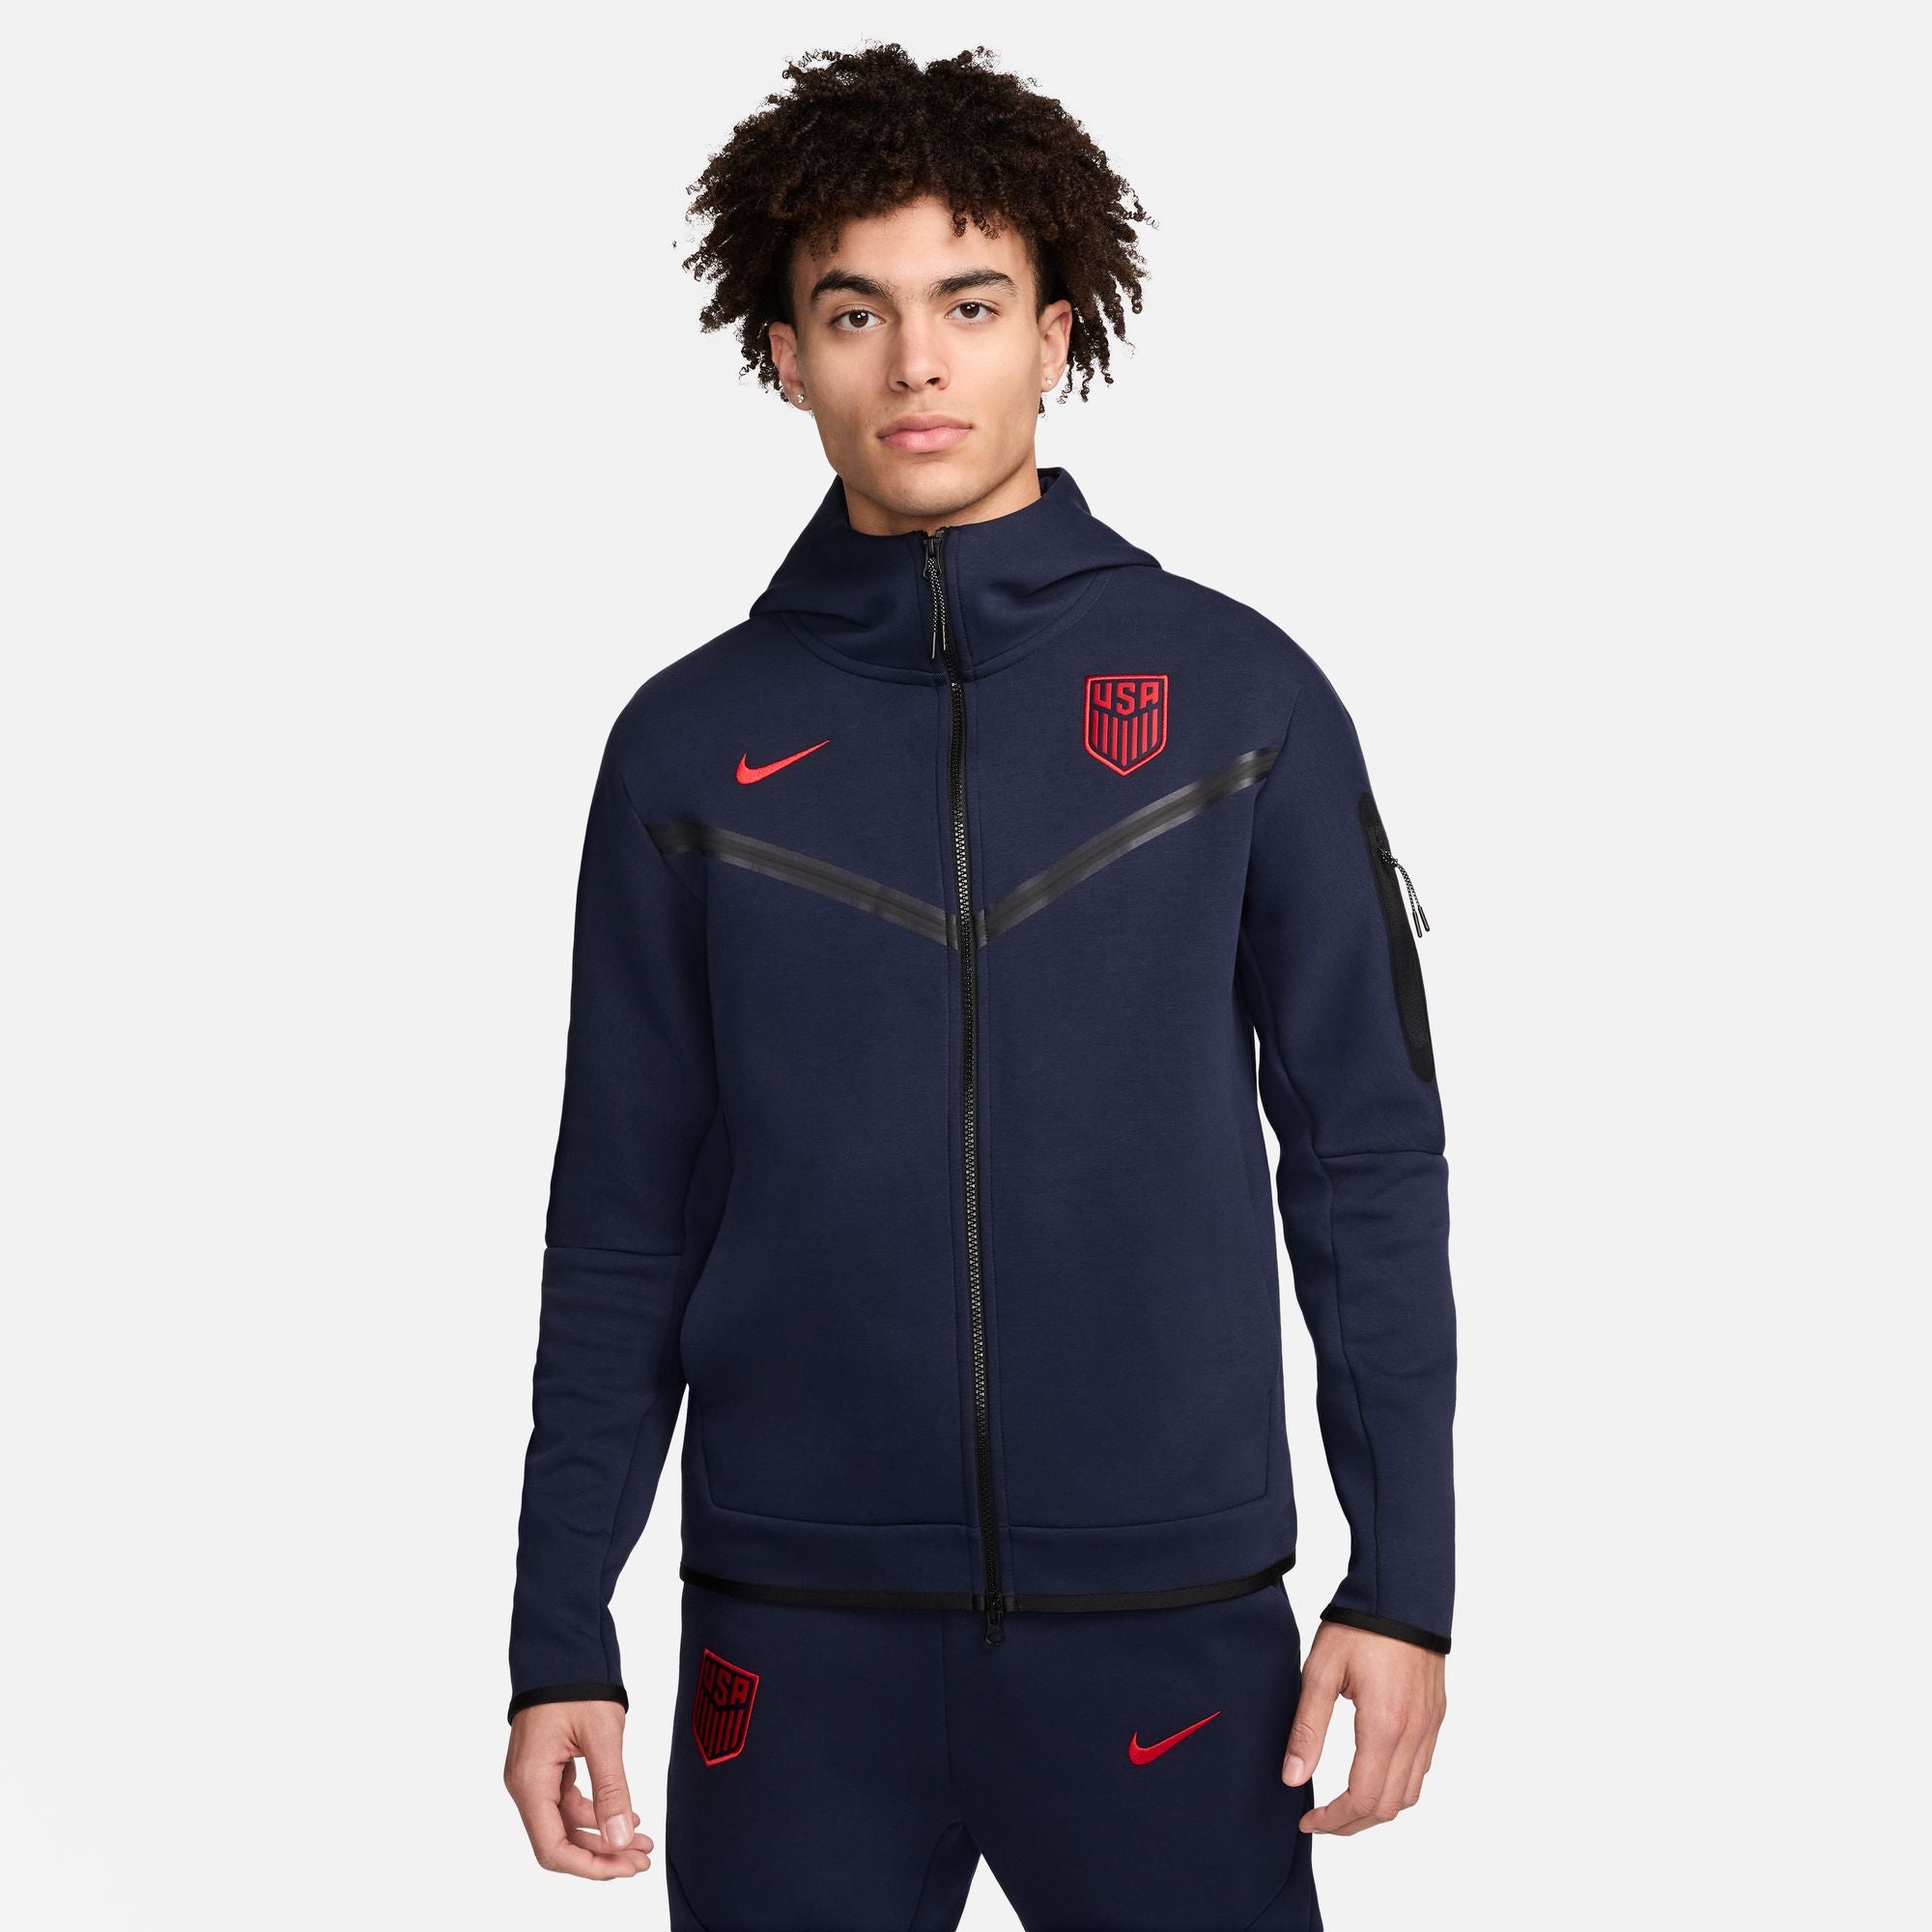 Nike USA NSW Men's Tech Fleece Full Zip Jacket